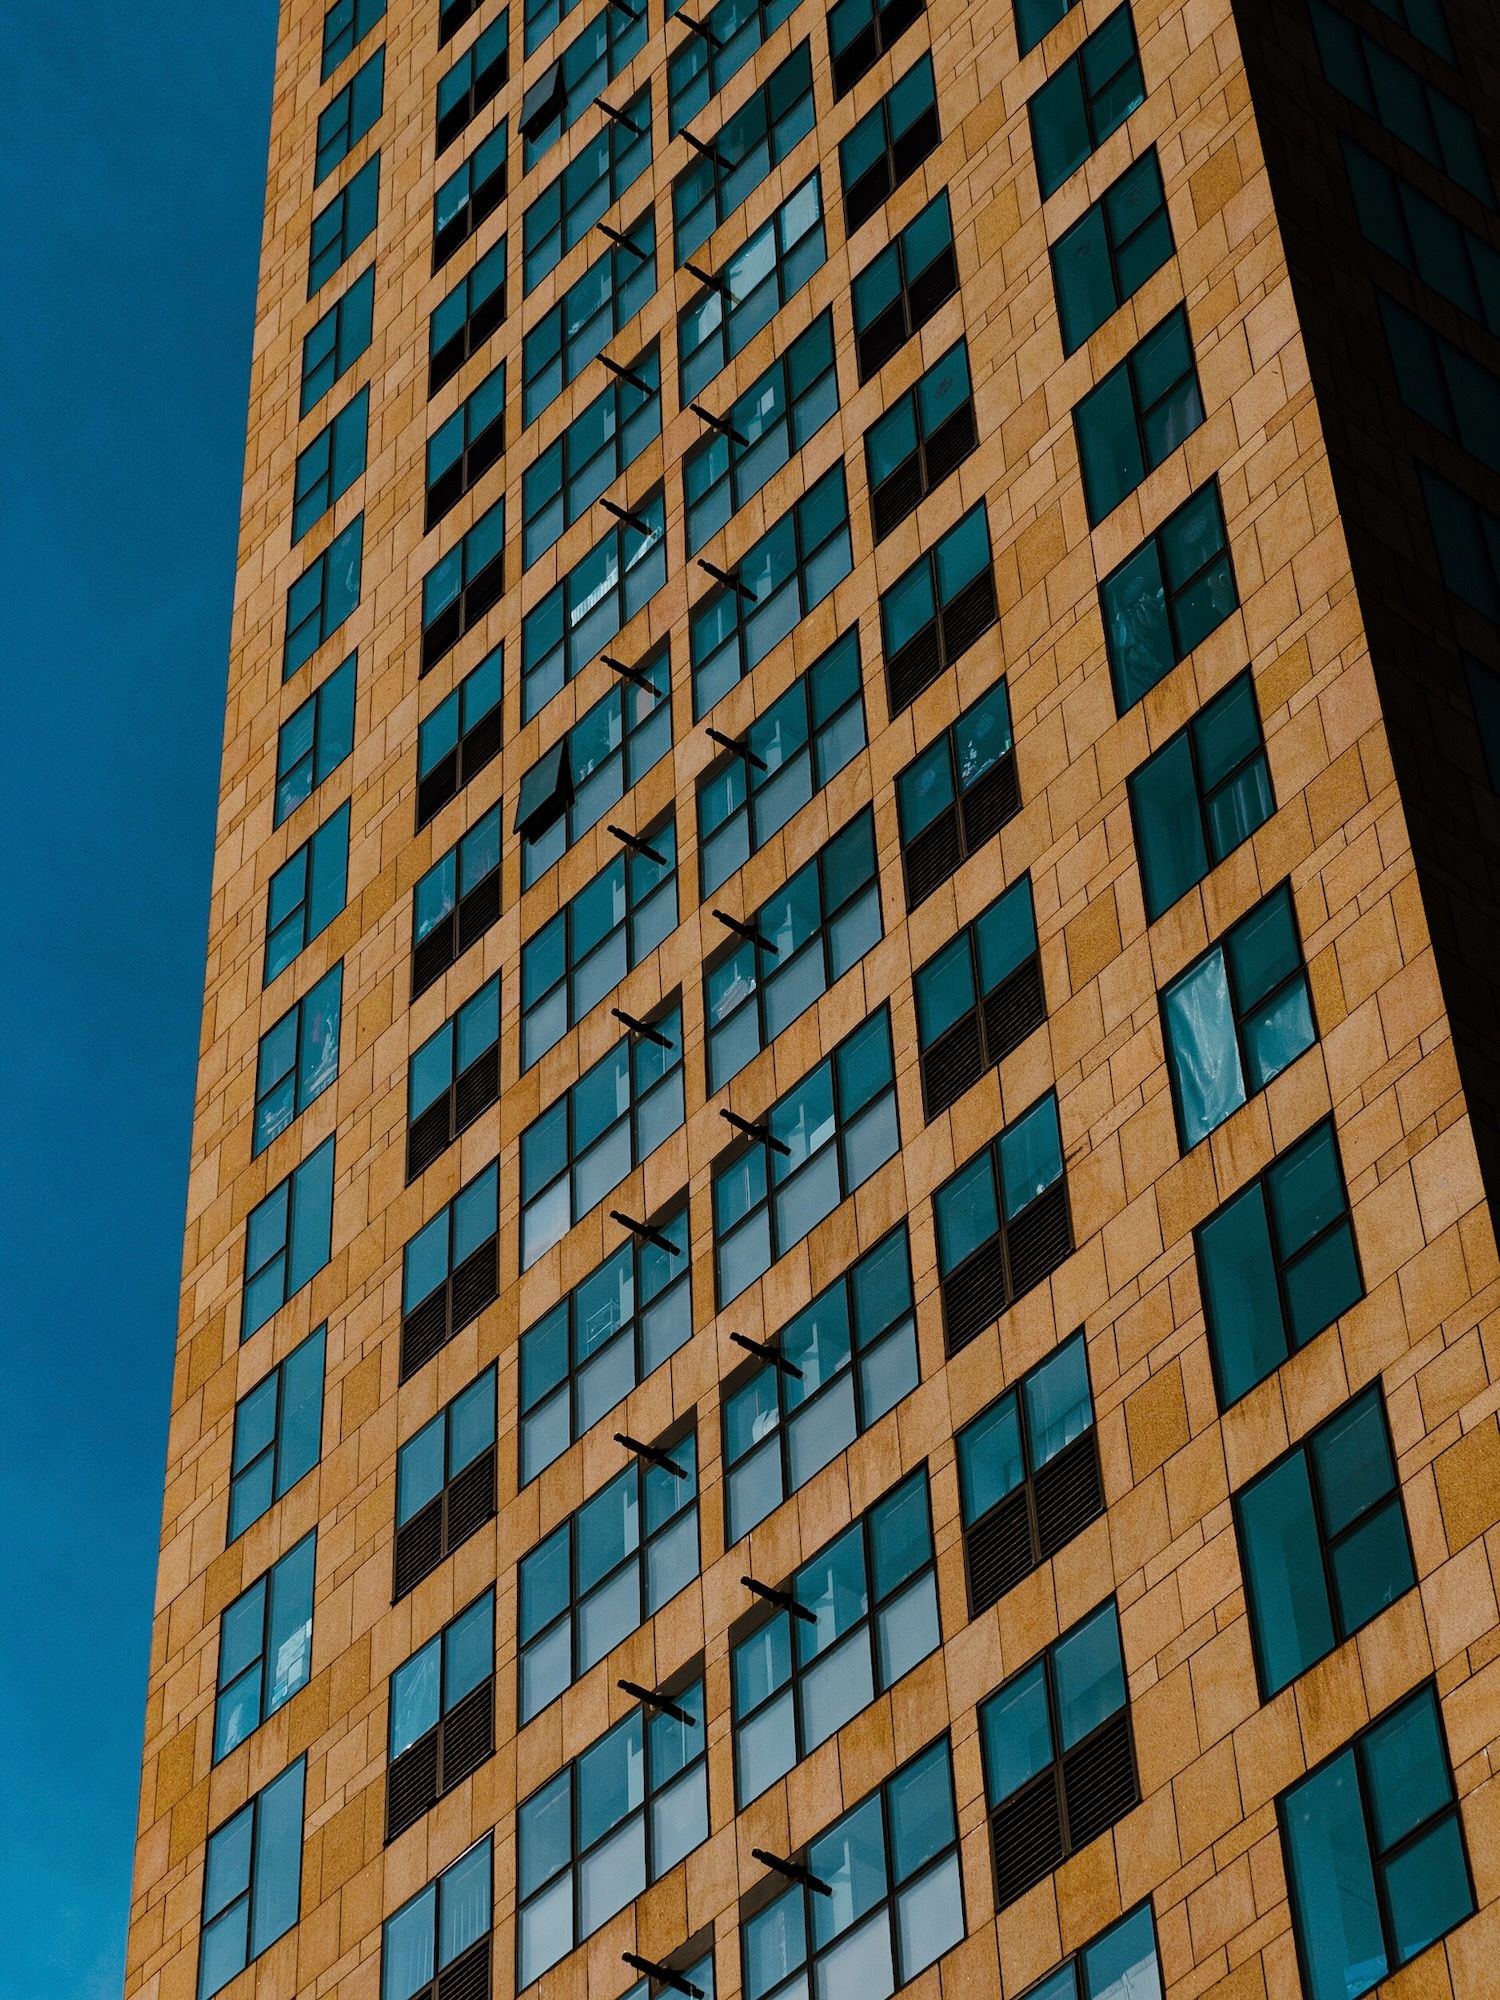 Photo Walk - Buildings Through a Long Lens